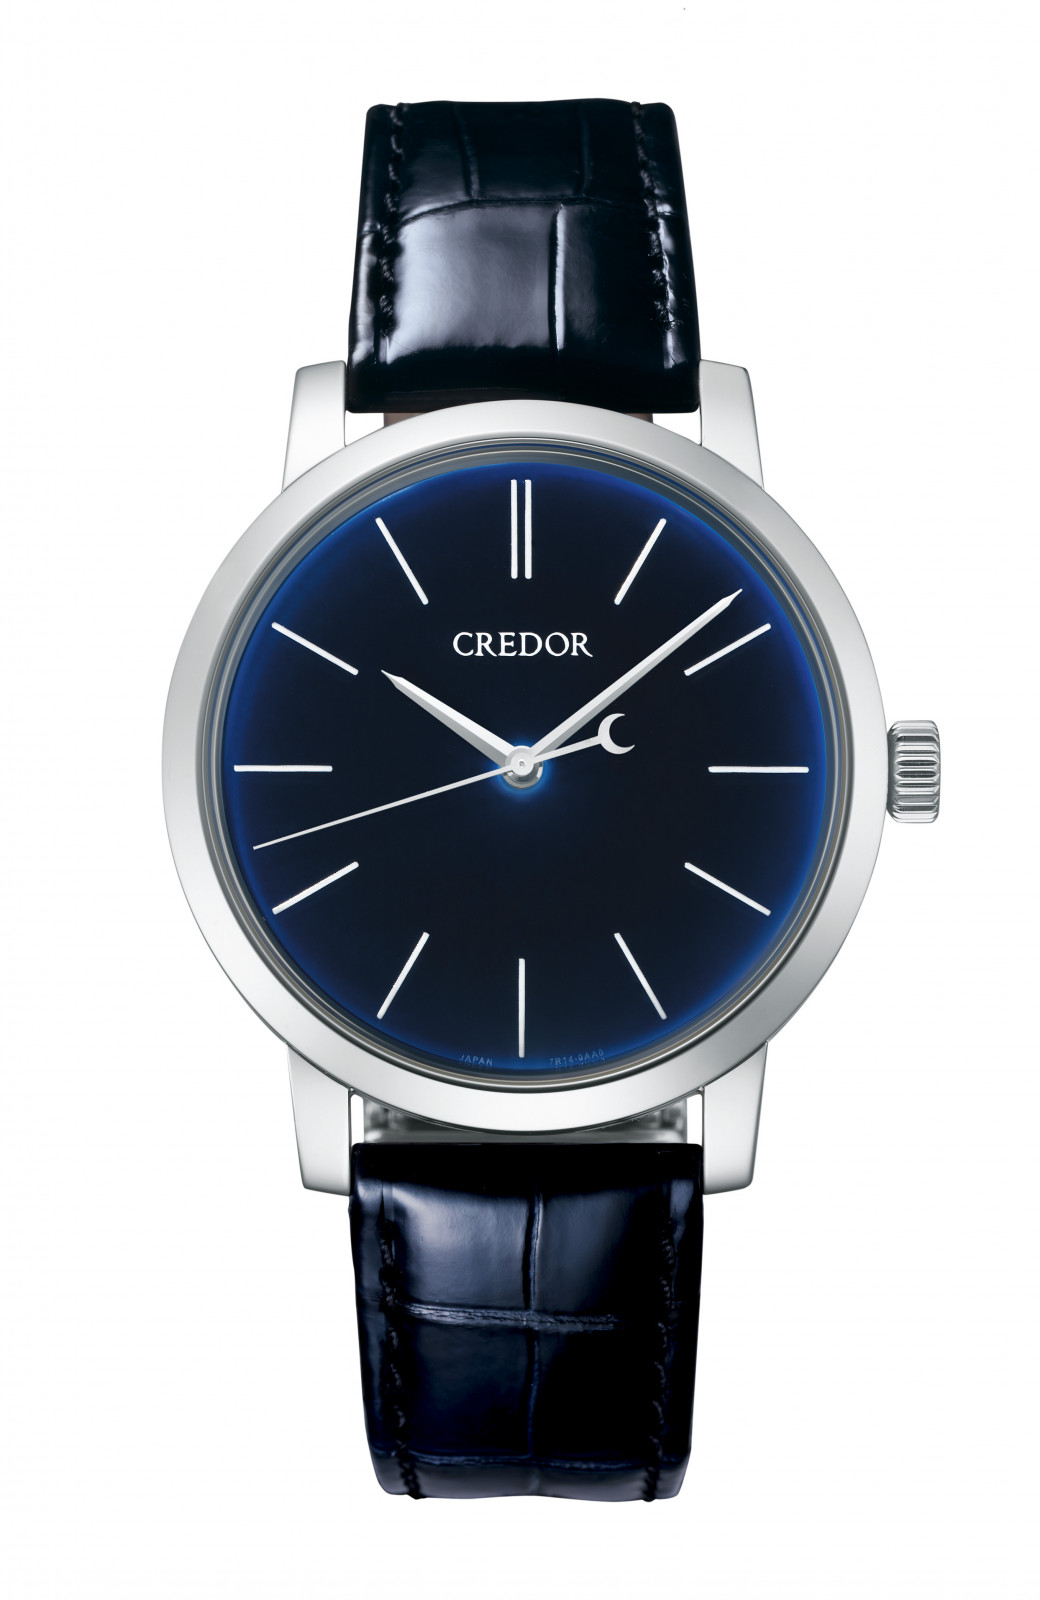 SEIKO・クレドール / シグノ / 2020年1月購入 / 年差±10秒 - 腕時計 ...